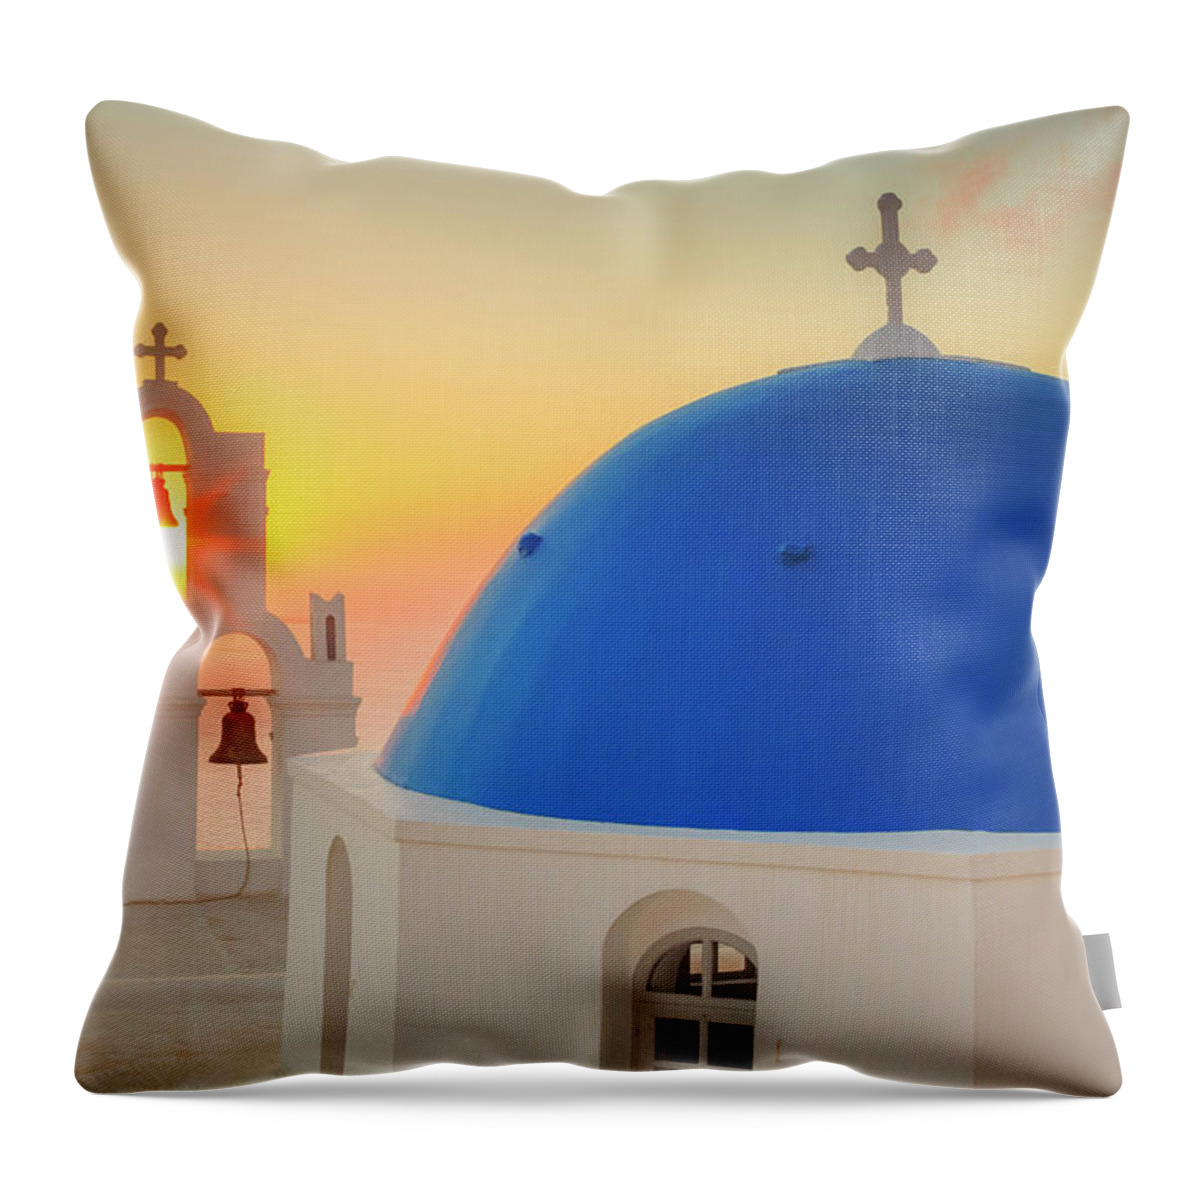 Estock Throw Pillow featuring the digital art Santorini Island, Church At Sunset by Maurizio Rellini